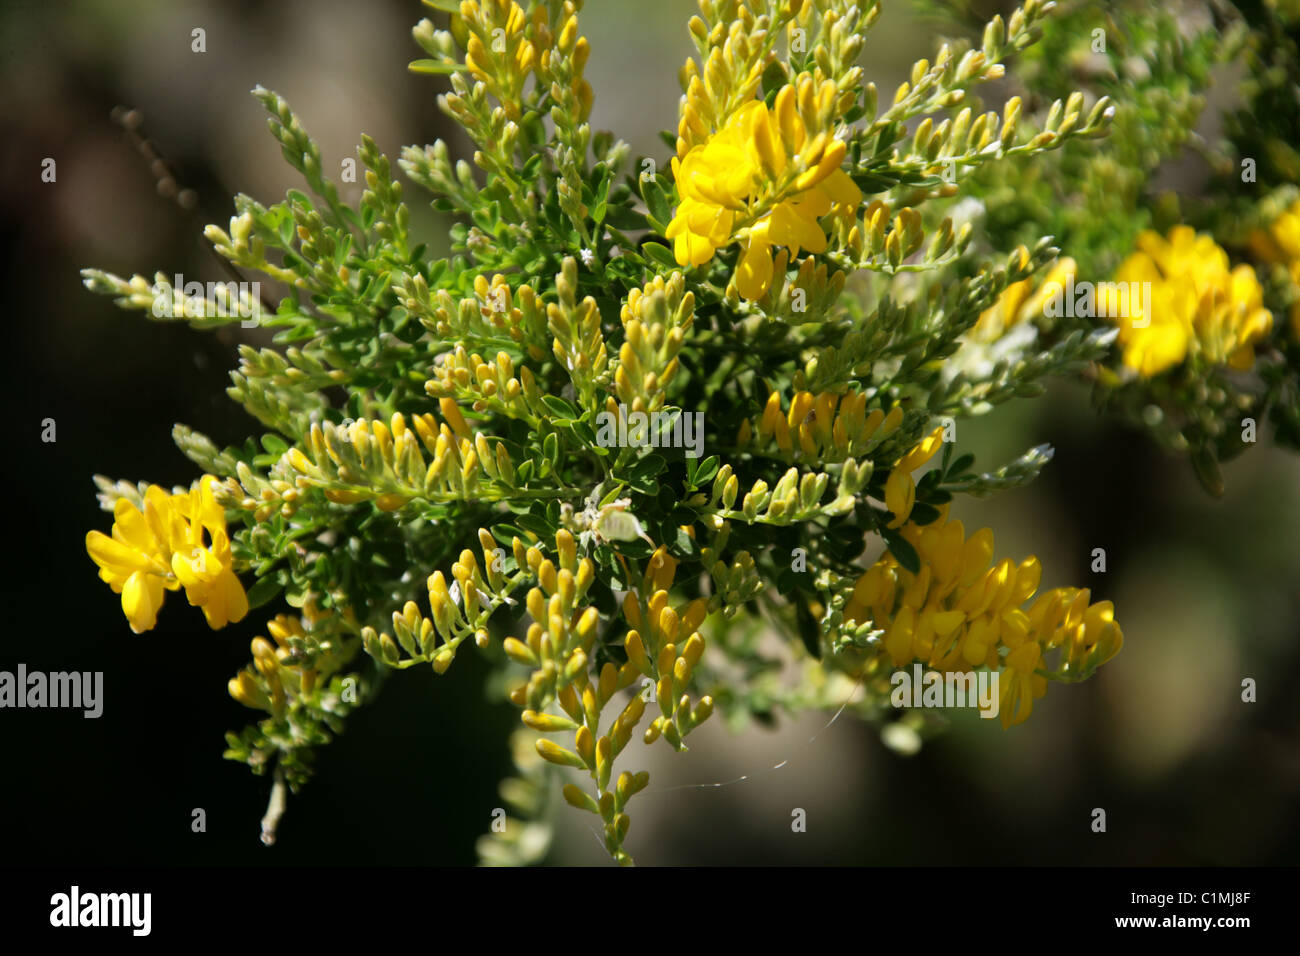 Shrub Broom, Sweet Broom or Yellow Broom, Genista racemosa, Fabaceae. Syn. Genista fragrans, Cytisus racemosus, C. spachianus. Stock Photo